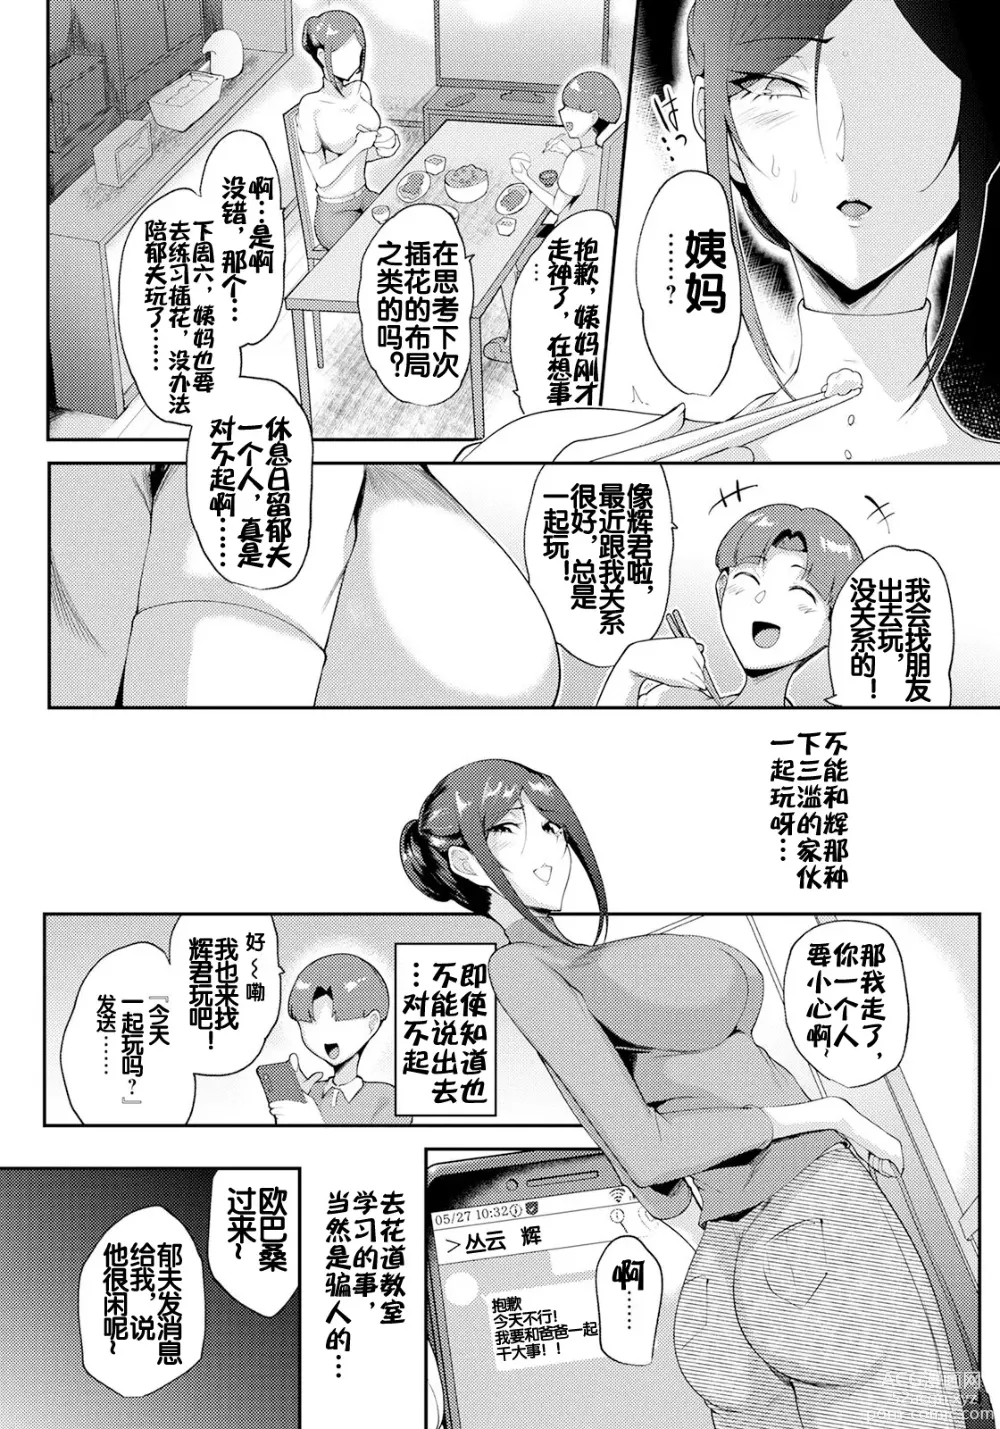 Page 9 of manga Saobakari